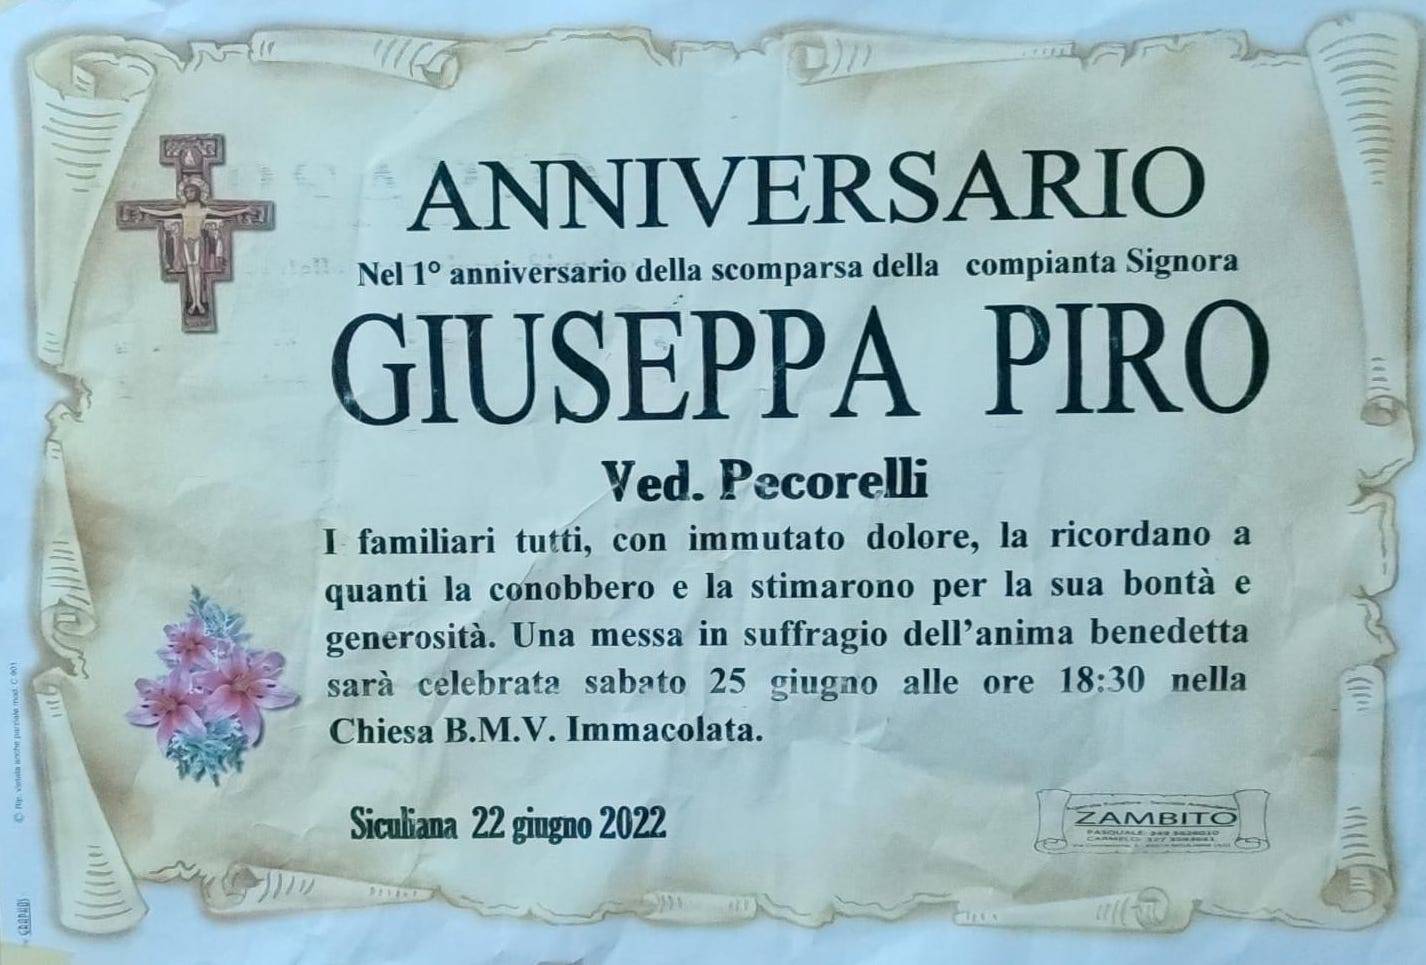 Giuseppa Piro